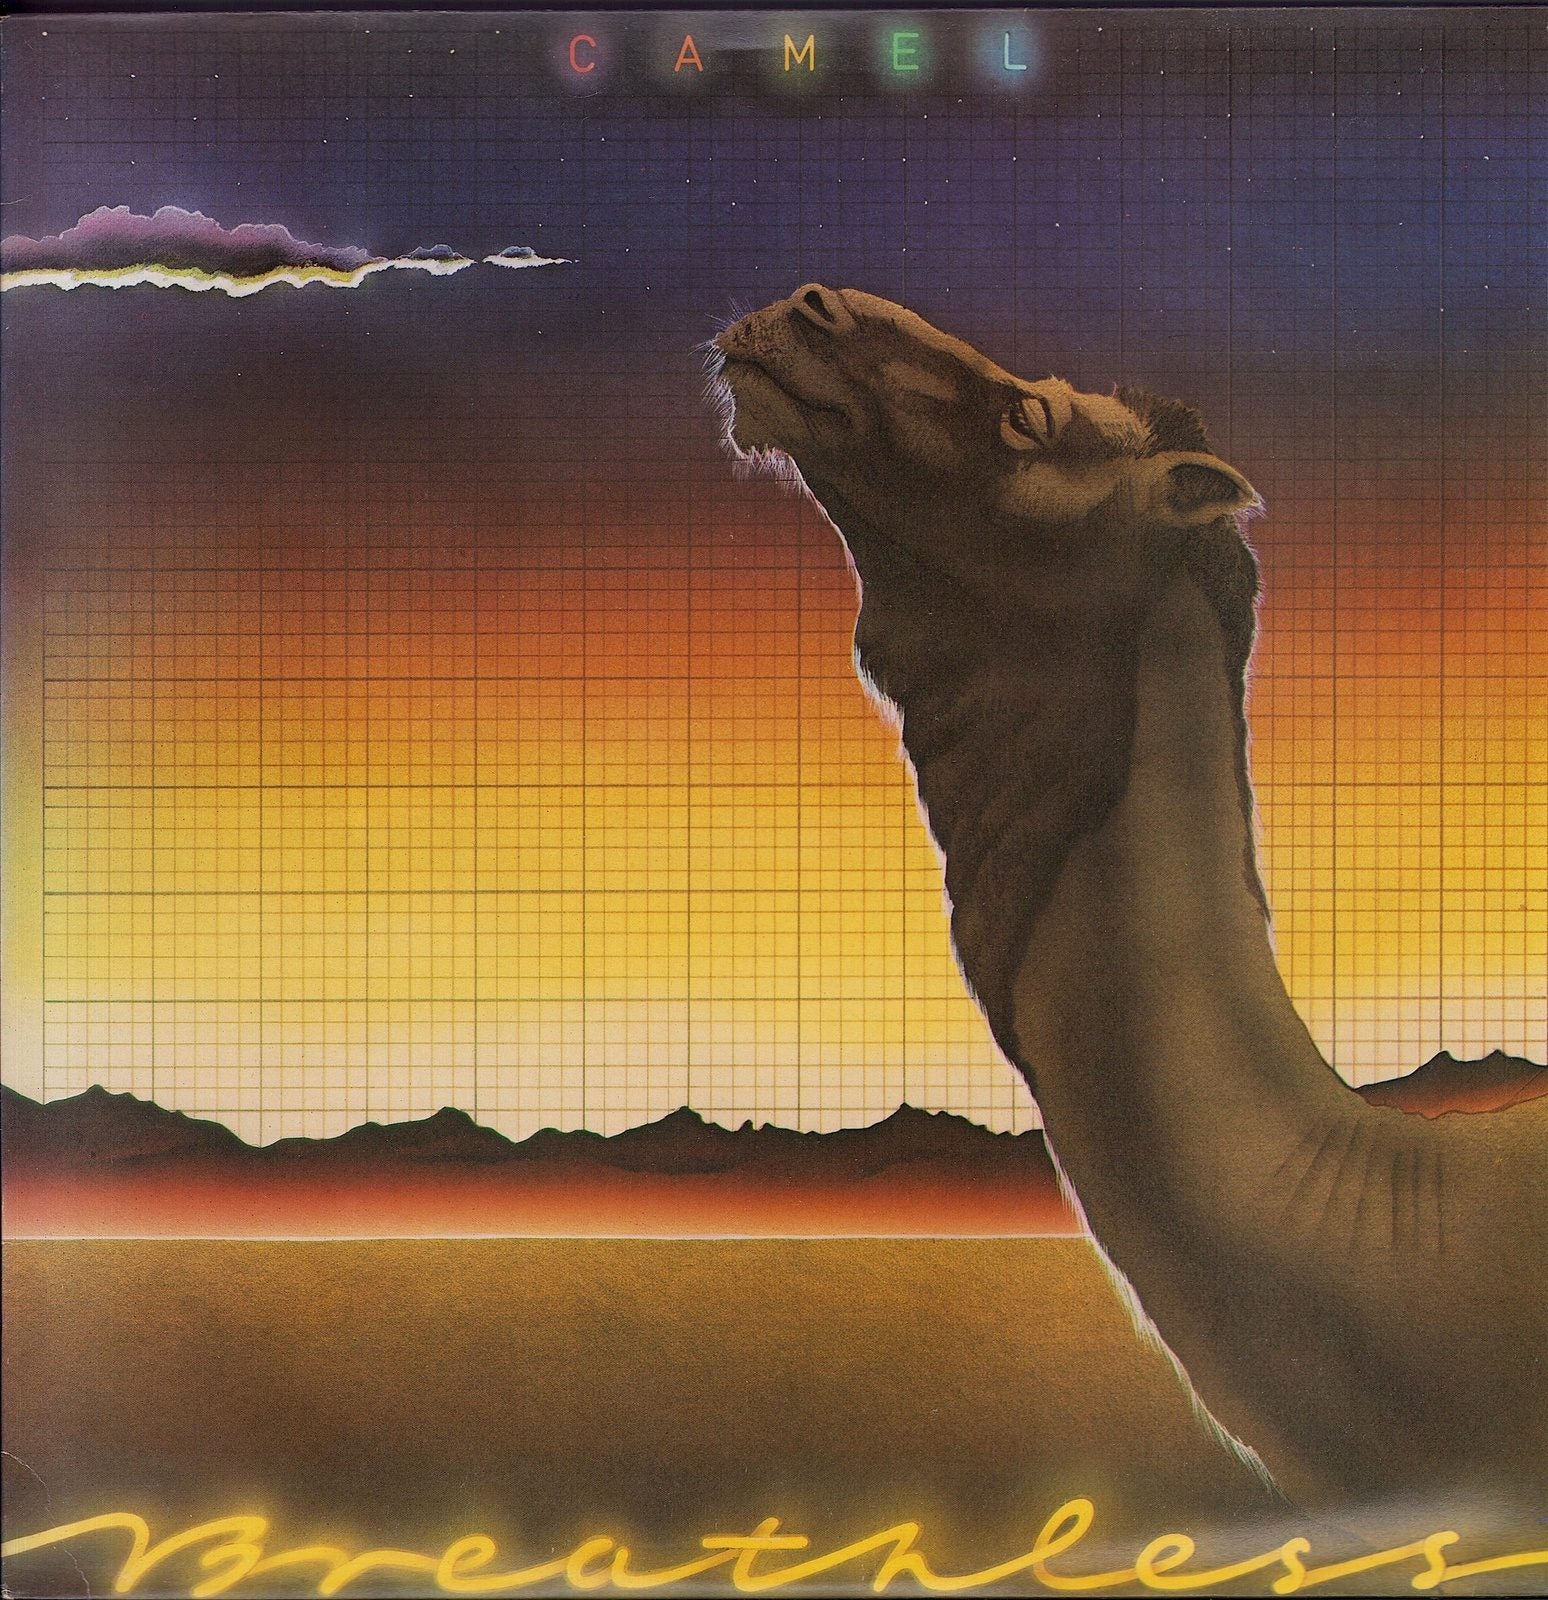 Camel ‎- Breathless Vinyl LP